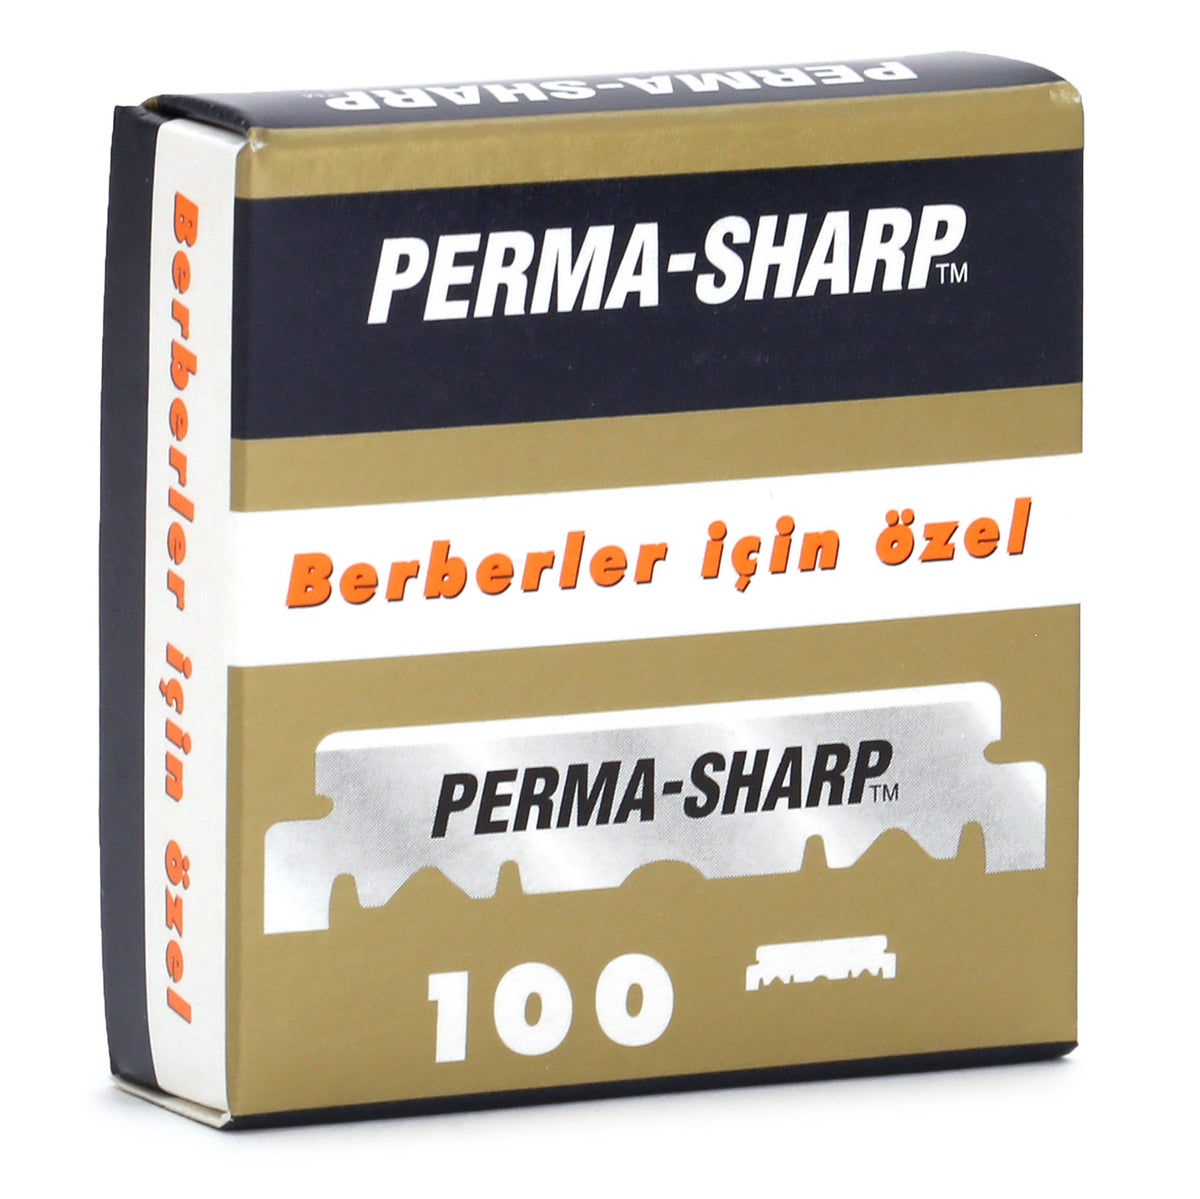 Perma-sharp half blades 100 pack